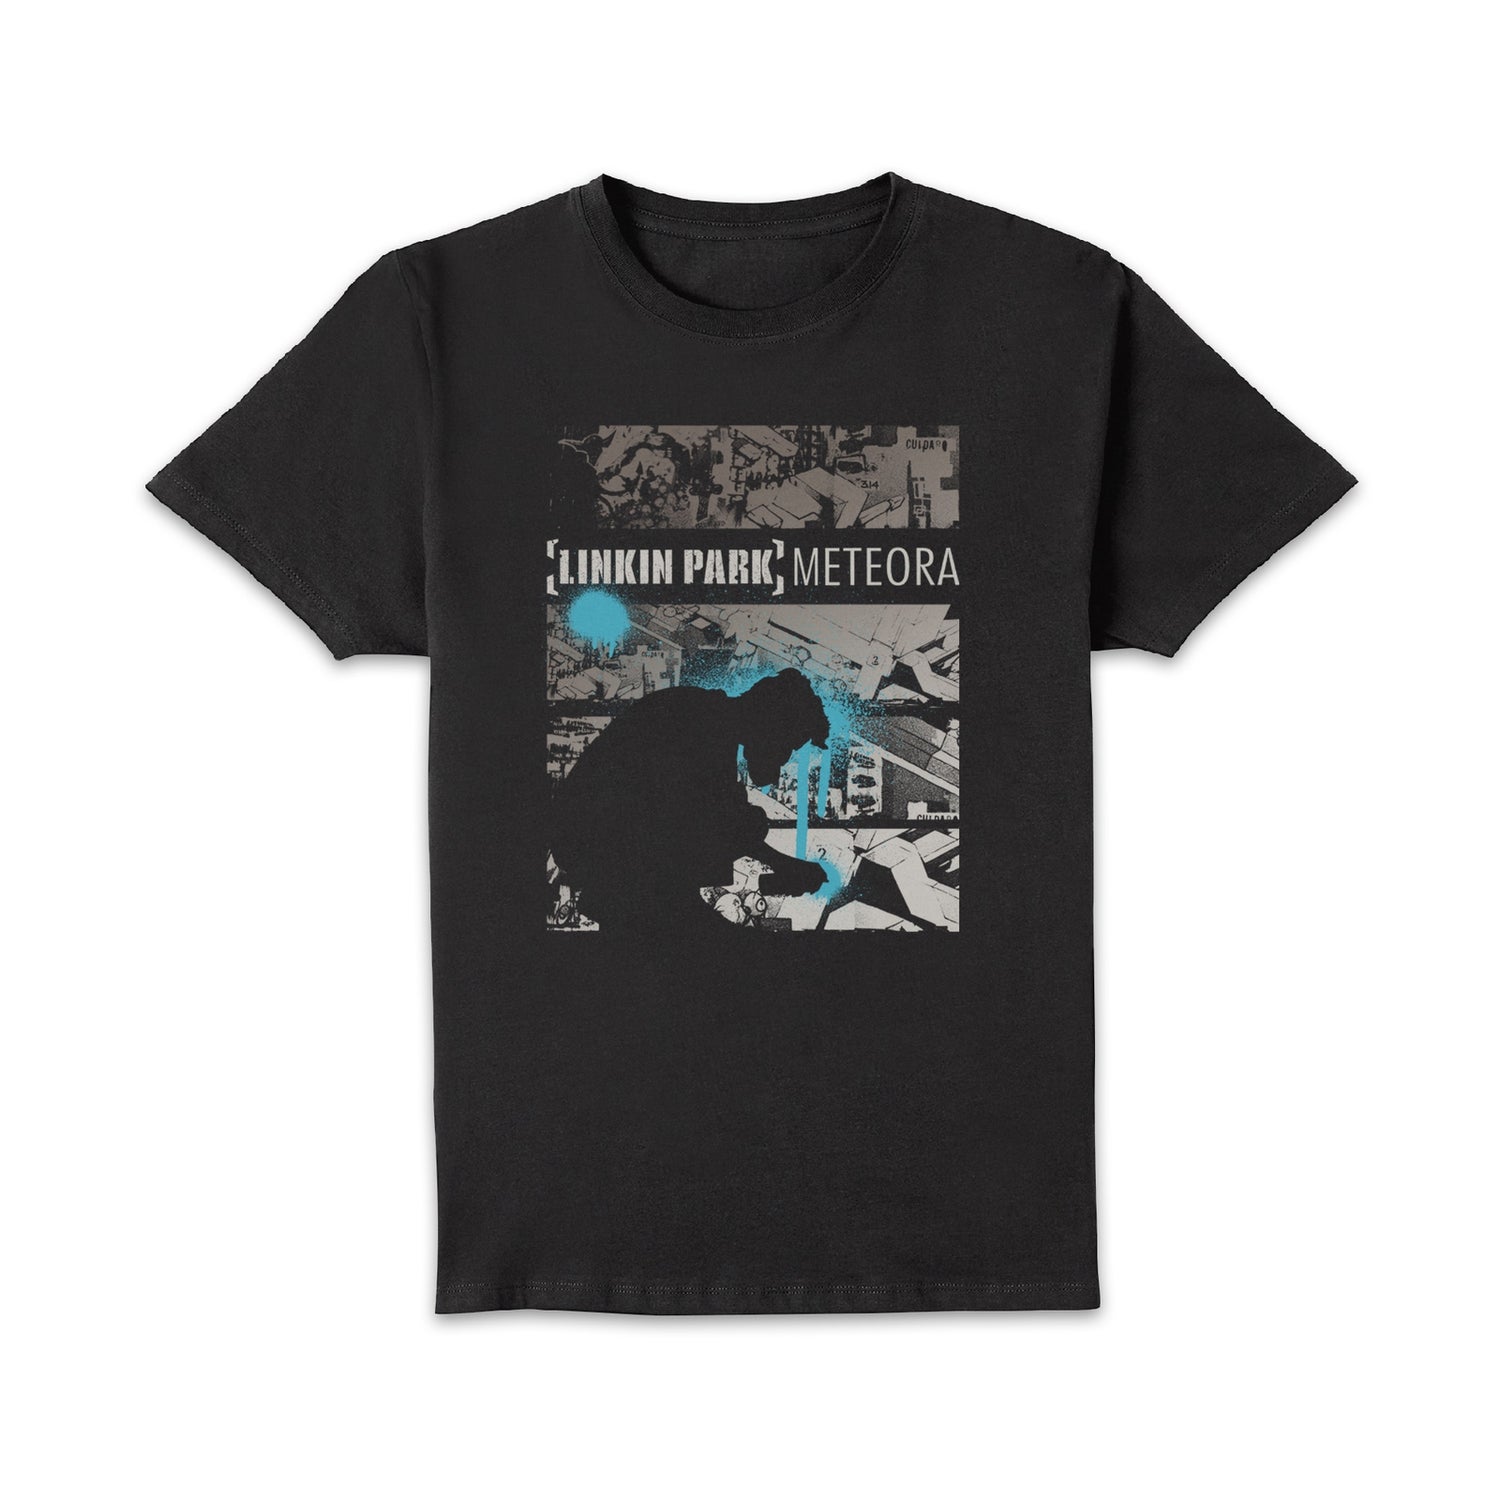 Linkin Park Meteora Unisex T-Shirt - Black Clothing - Zavvi UK